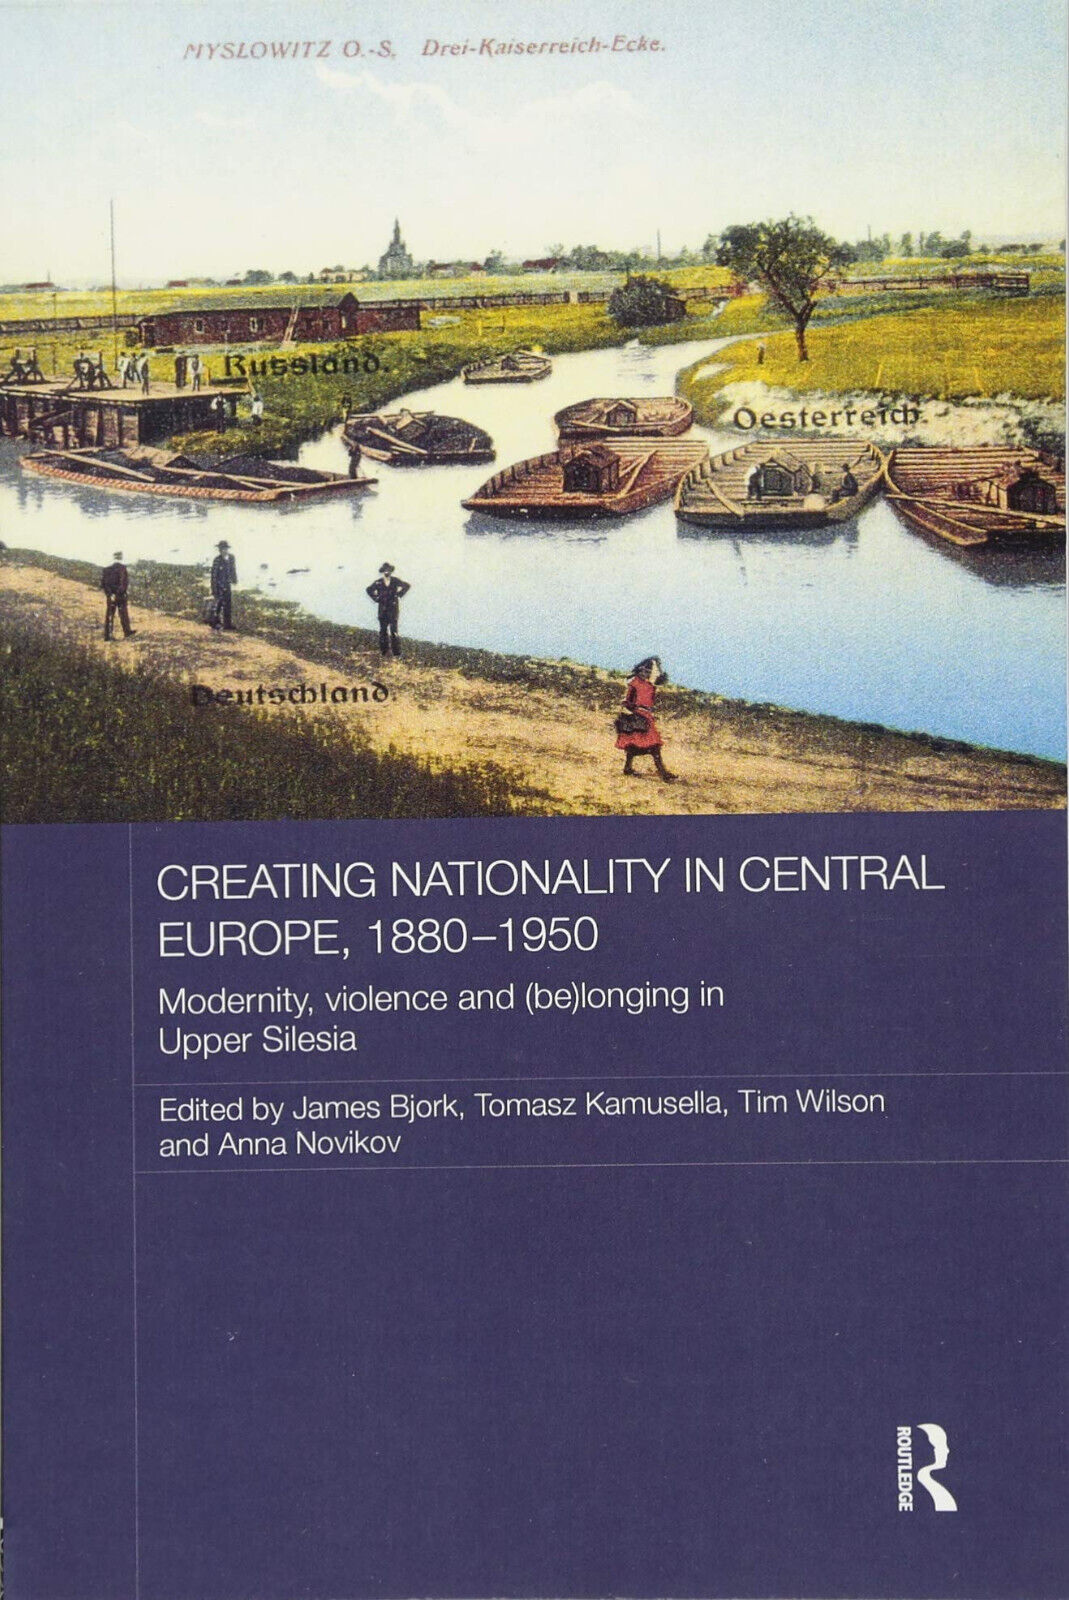 Creating Nationality in Central Europe, 1880-1950 - Tomasz Kamusella - 2017